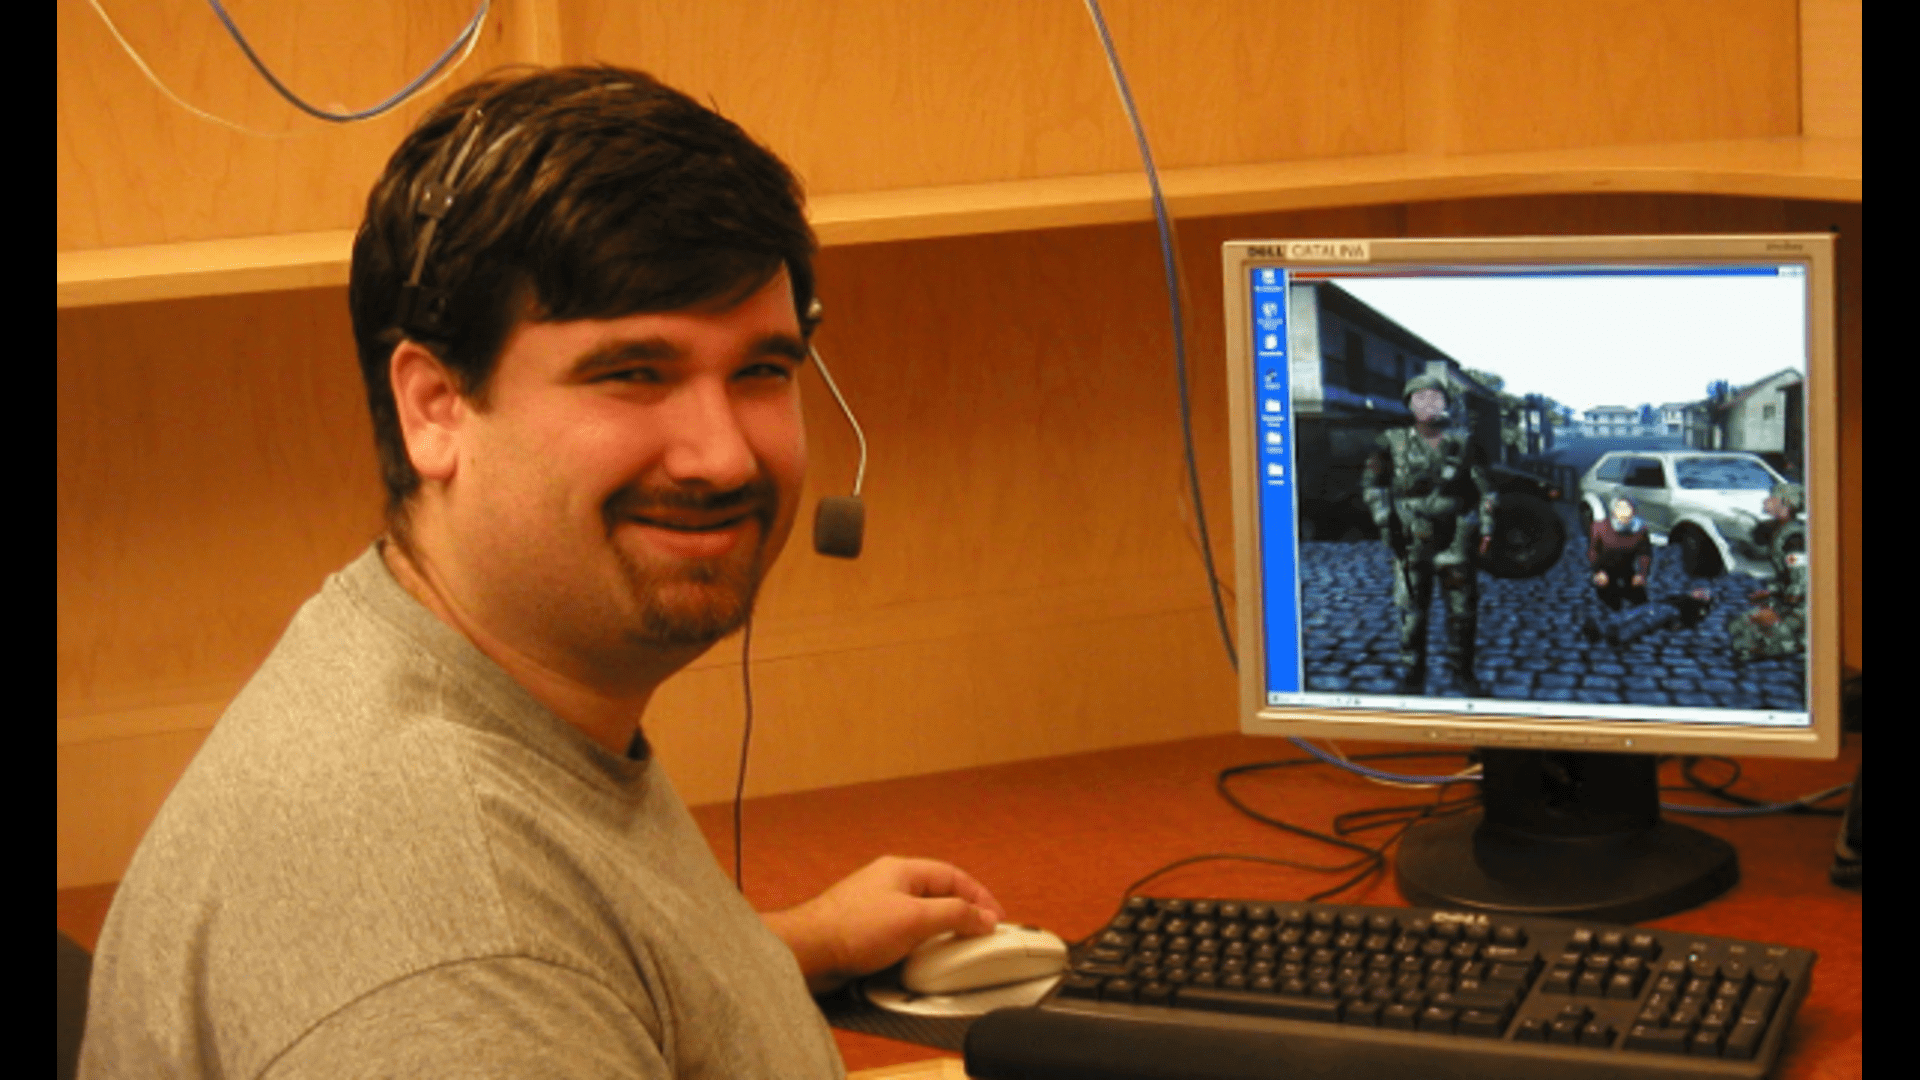 Video Games Developer to Computer Scientist at ICT